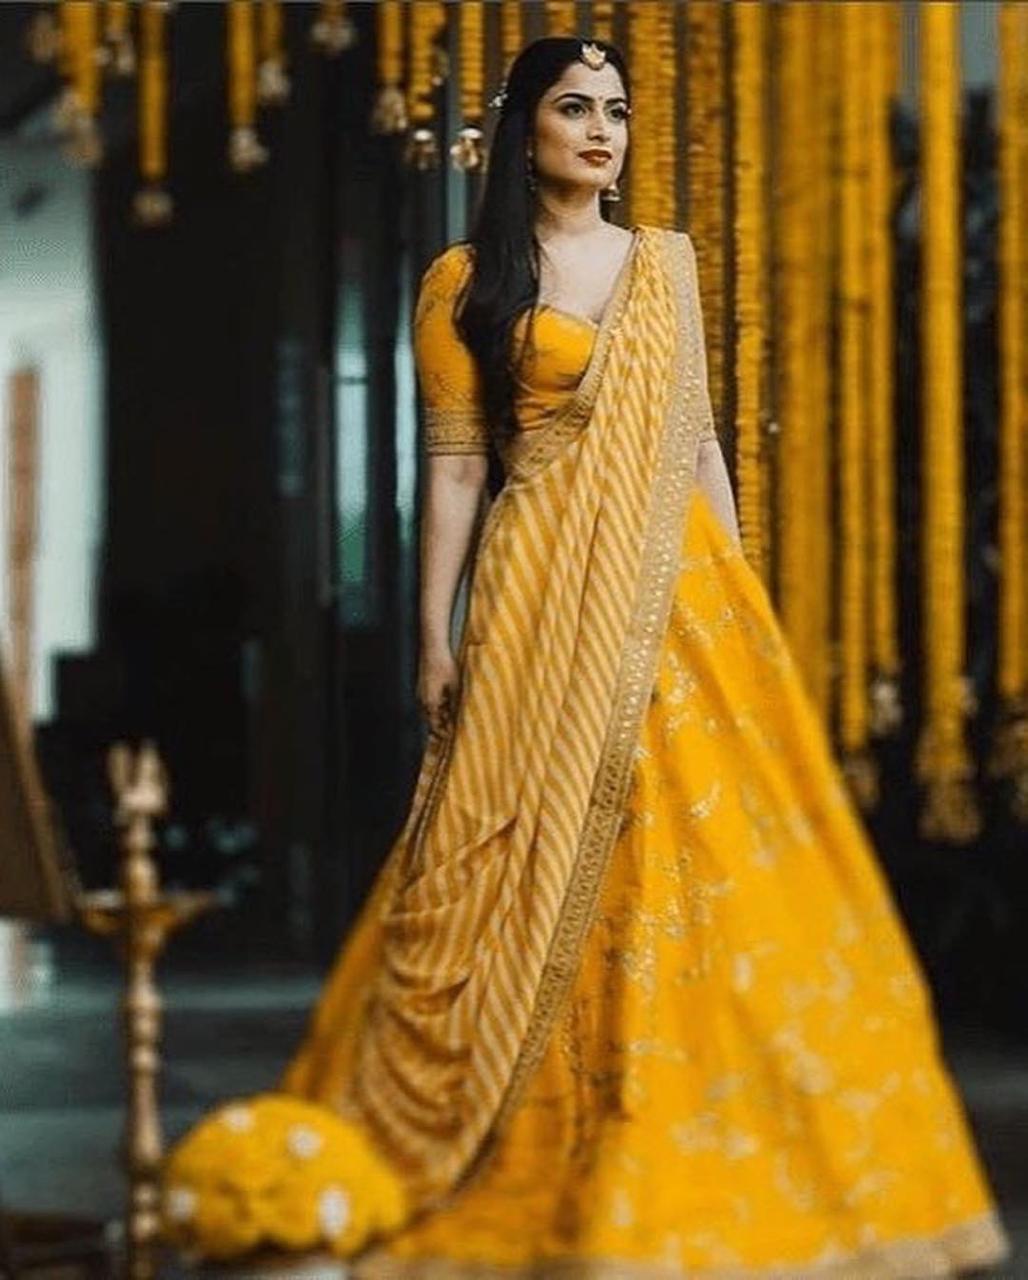 Gorgeous Designer Yellow Lahnga choli  For Haldi Ceremony